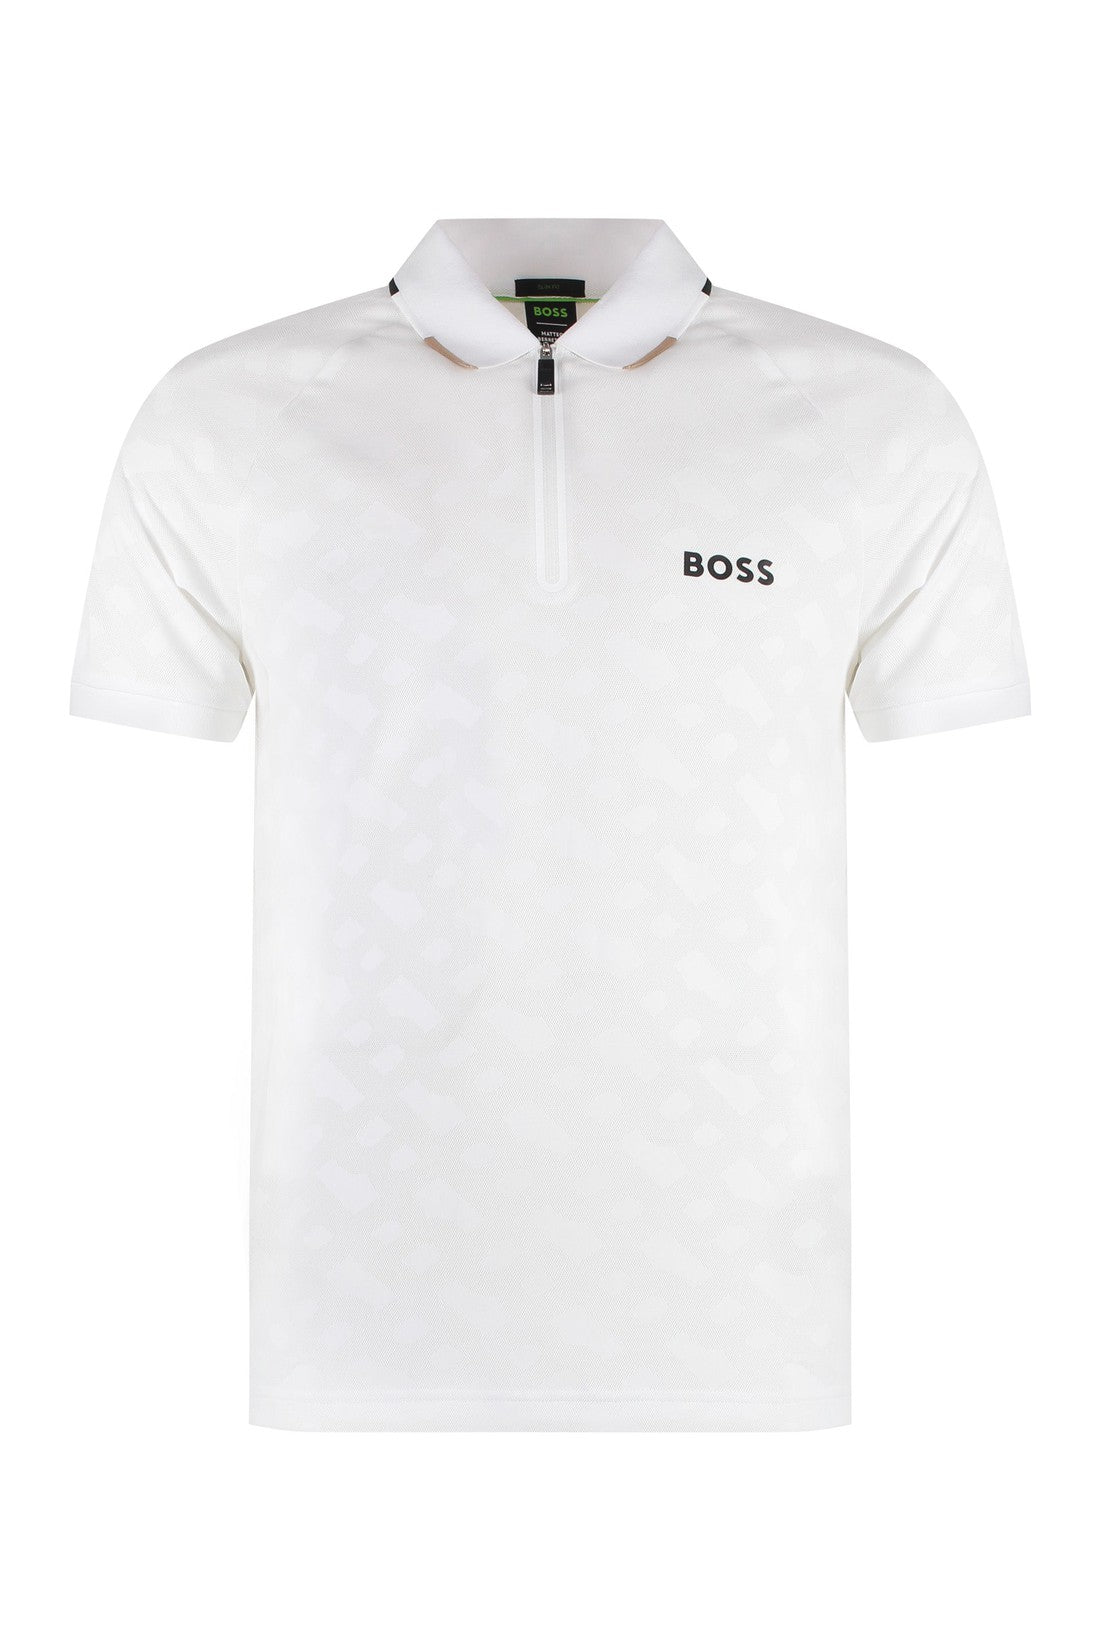 BOSS-OUTLET-SALE-BOSS x Matteo Berrettini - Technical oxford fabric polo shirt-ARCHIVIST